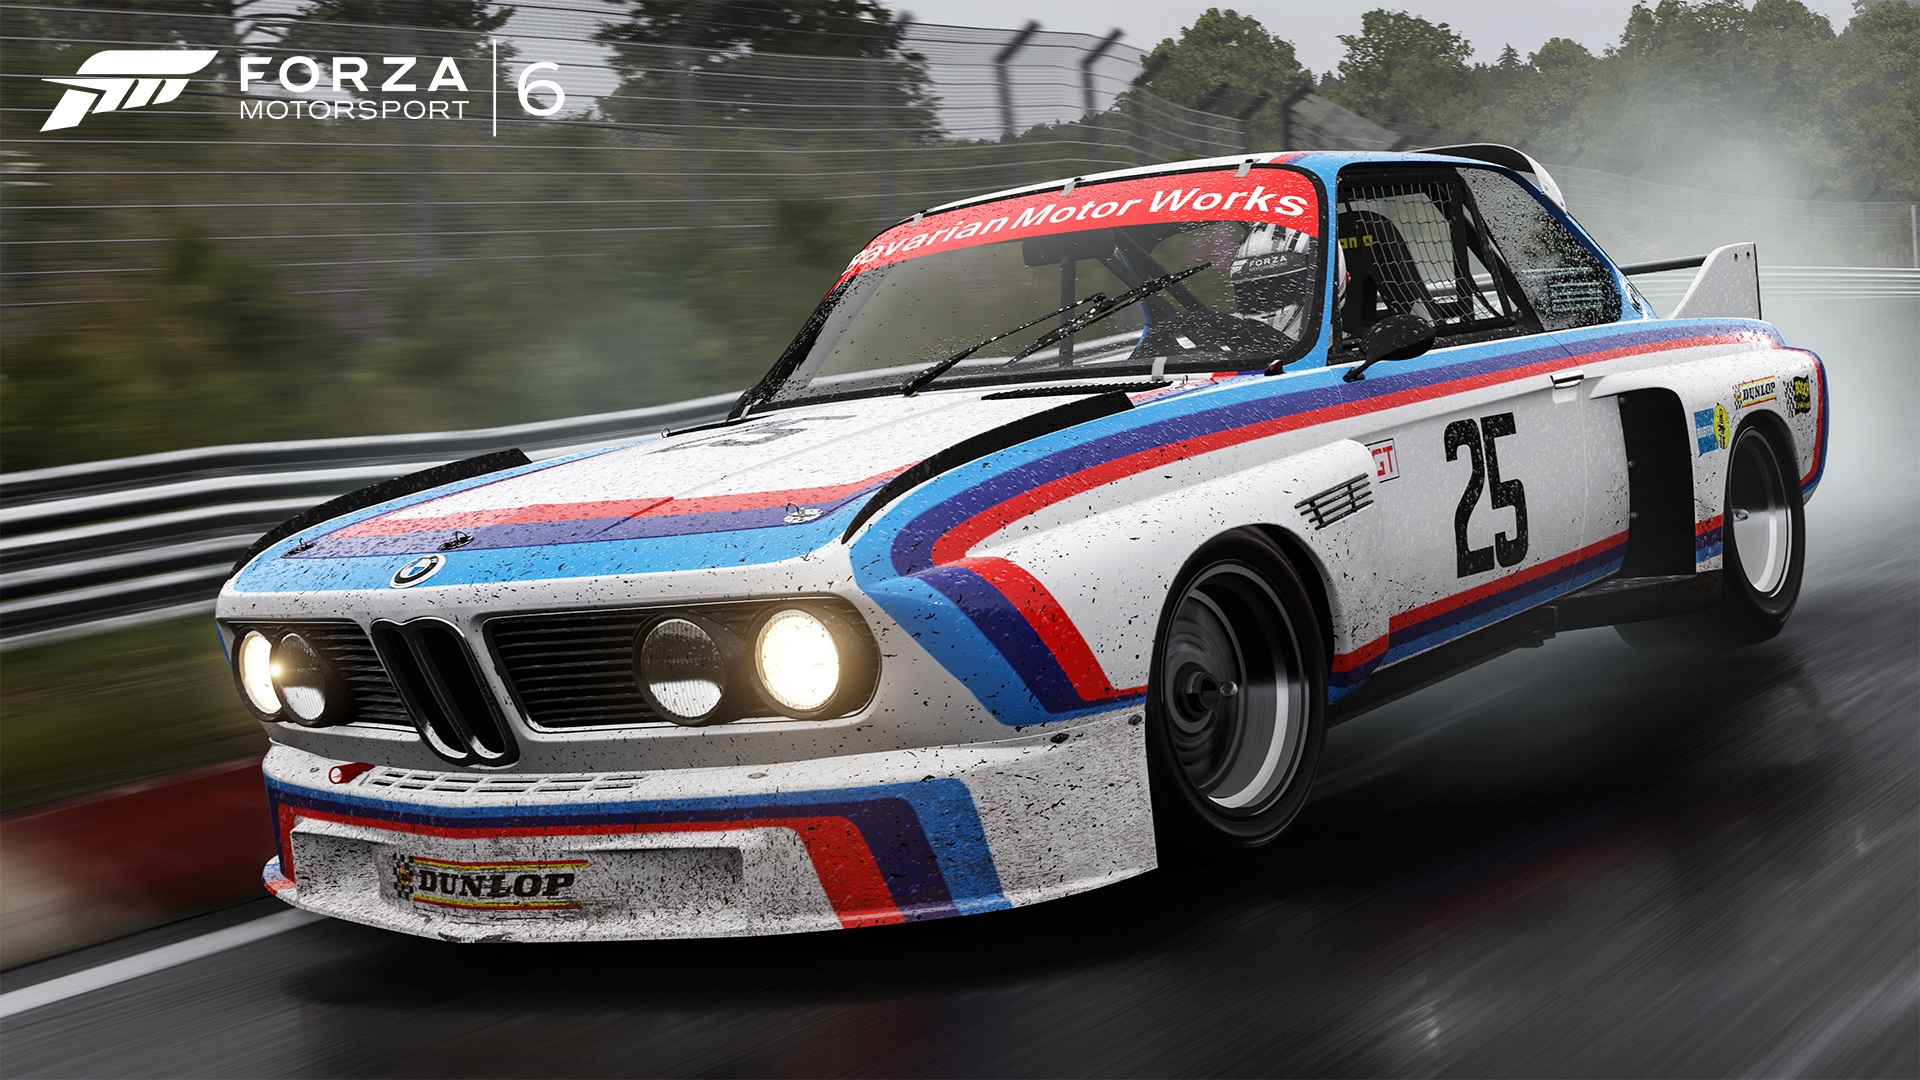 Forza Motorsport 6 Viac ako 450 ut zaruuje, e si urite njdete svojho milika.